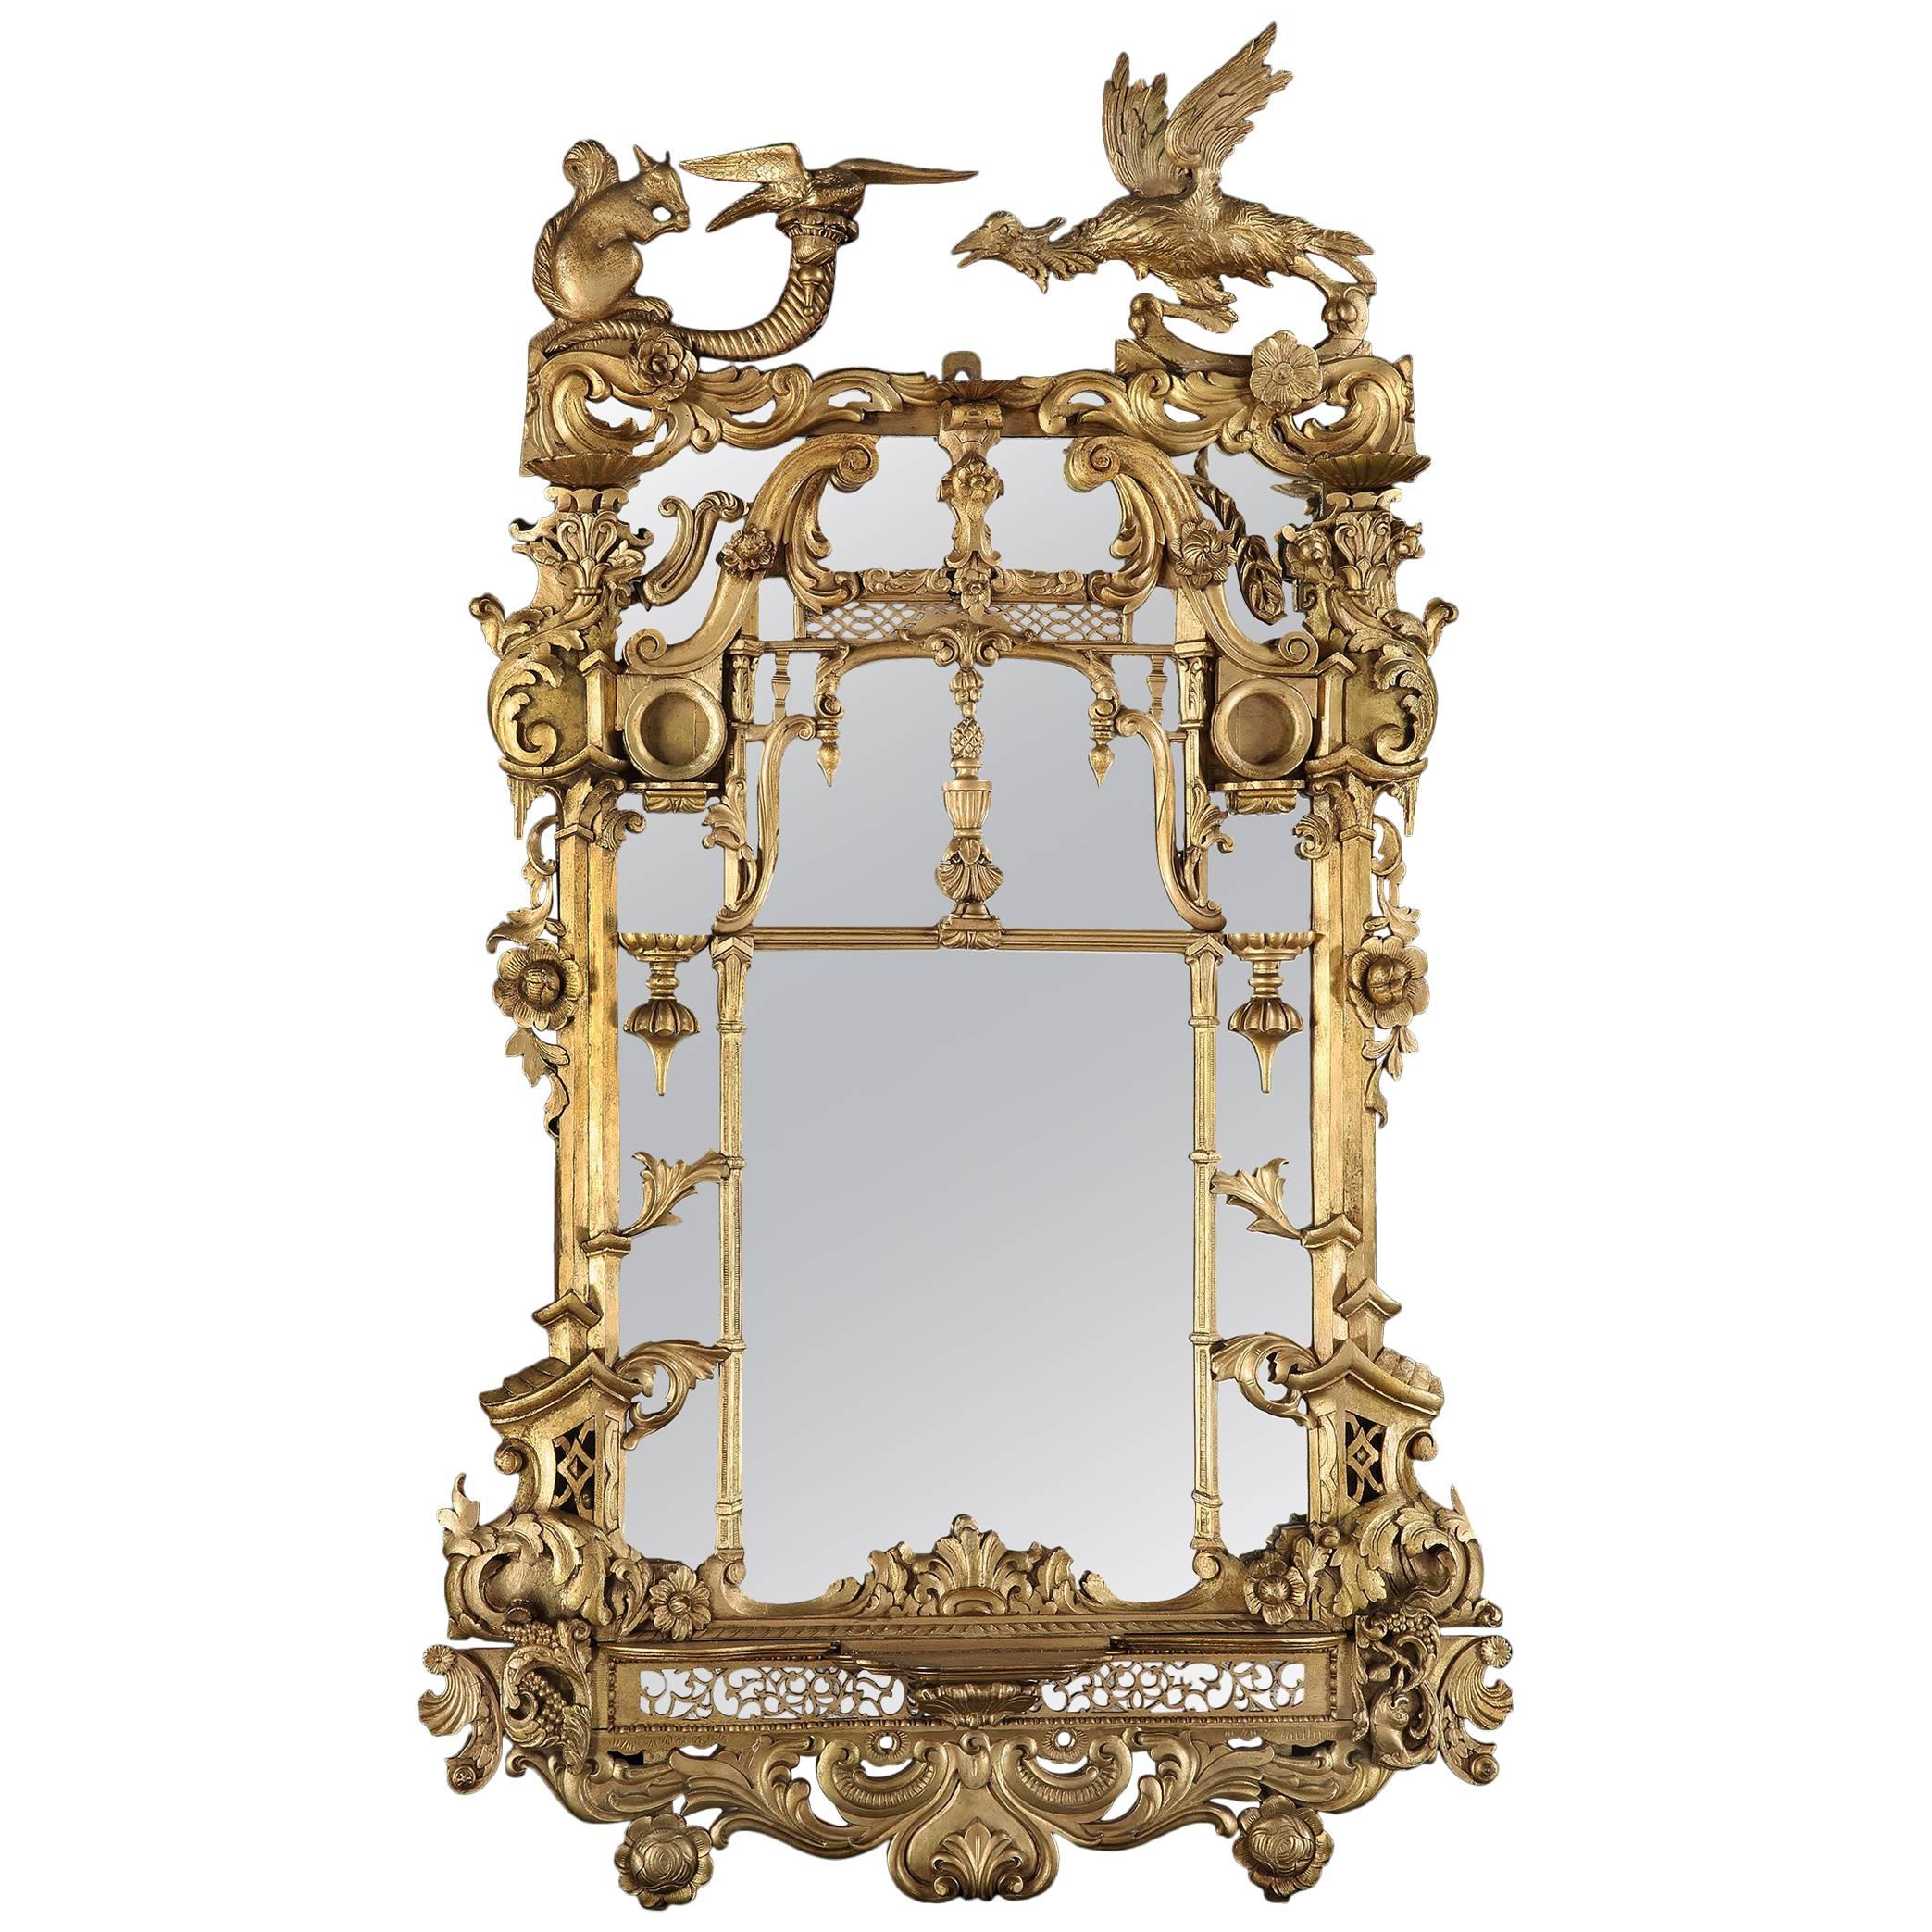 Irish 19th Century Giltwood Mirror in the Rococo Manner